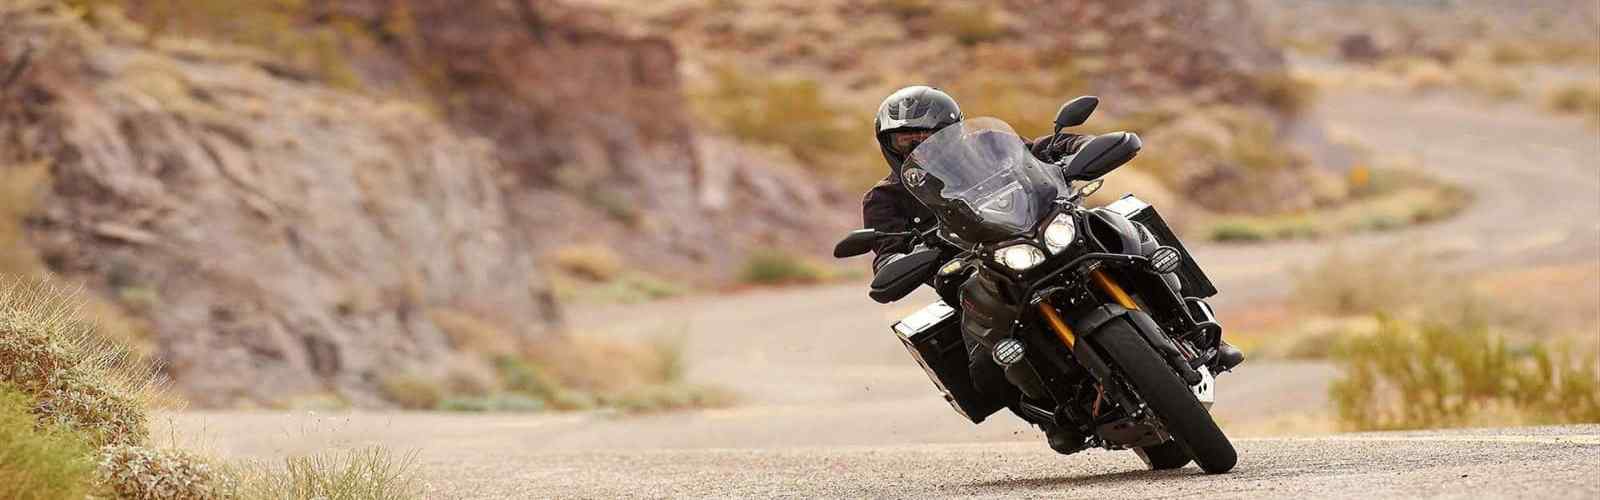 A motorcycle ride in Morocco to discover hidden treasures